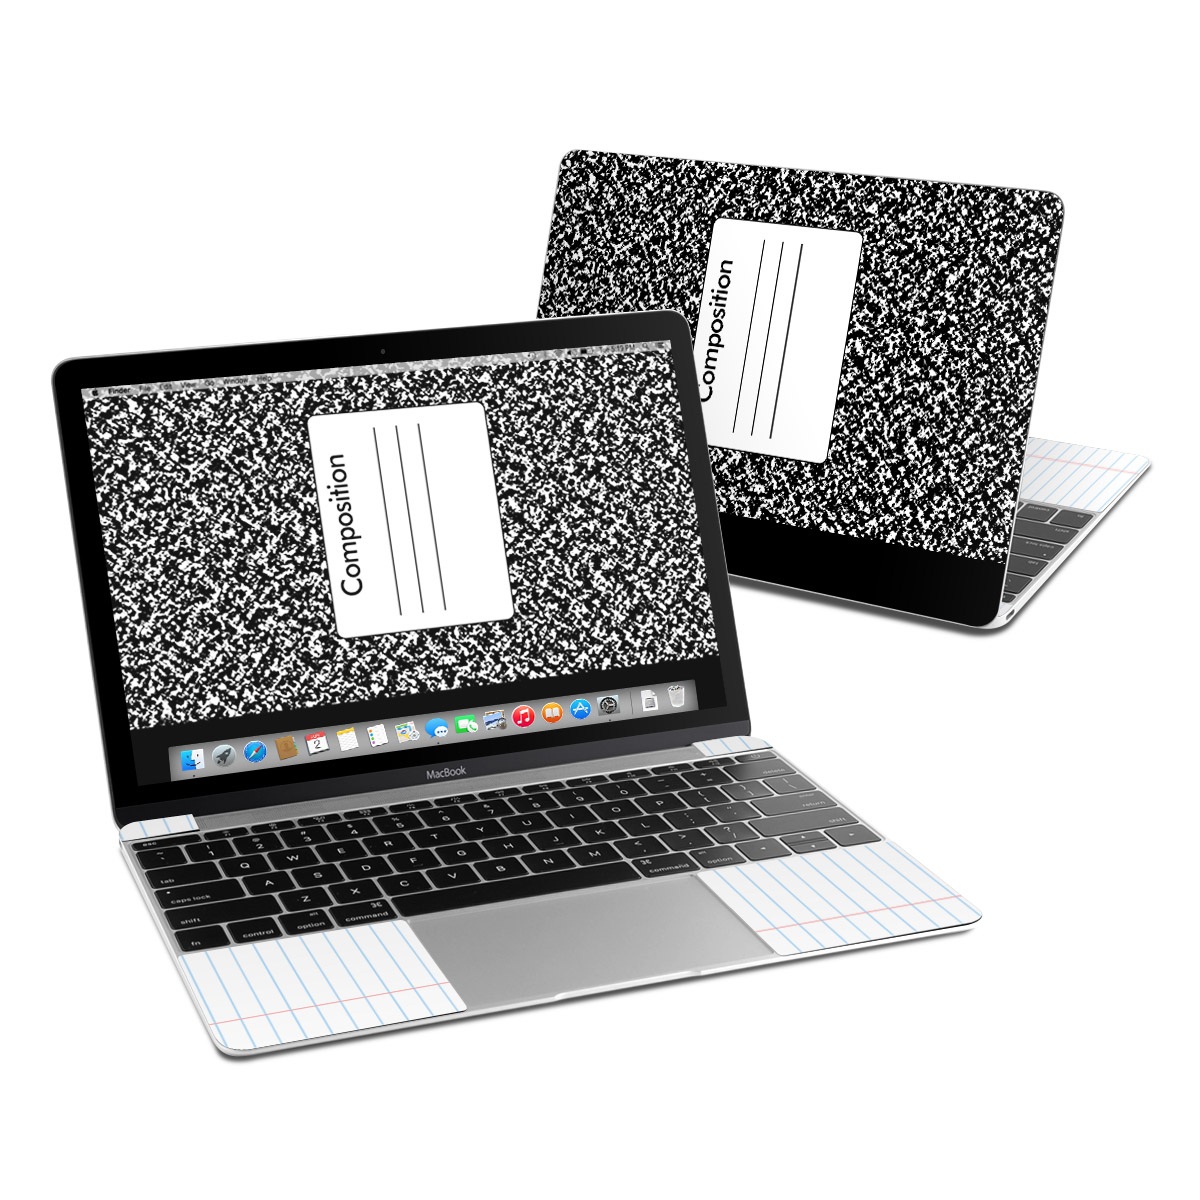 MacBook 12in Skin - Composition Notebook (Image 1)